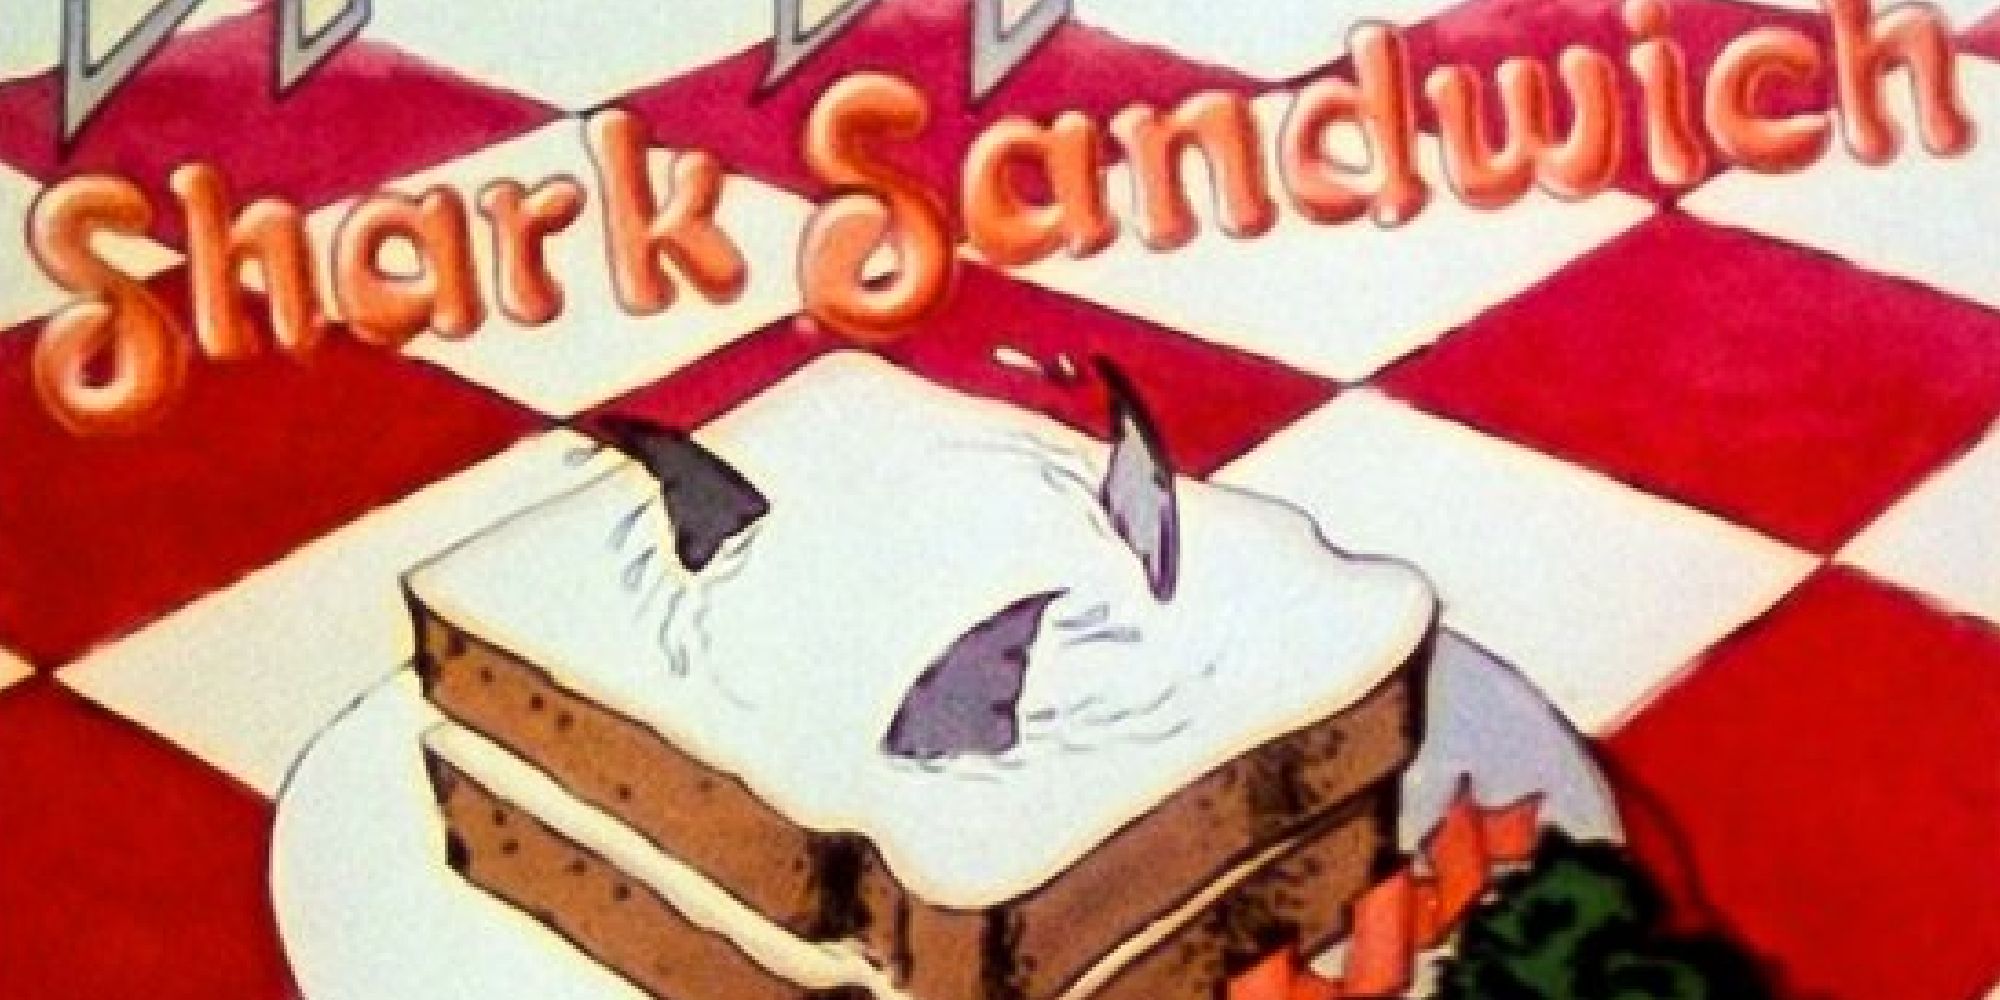 The album art for Spinal Tap's 1980 album Shark Sandwich